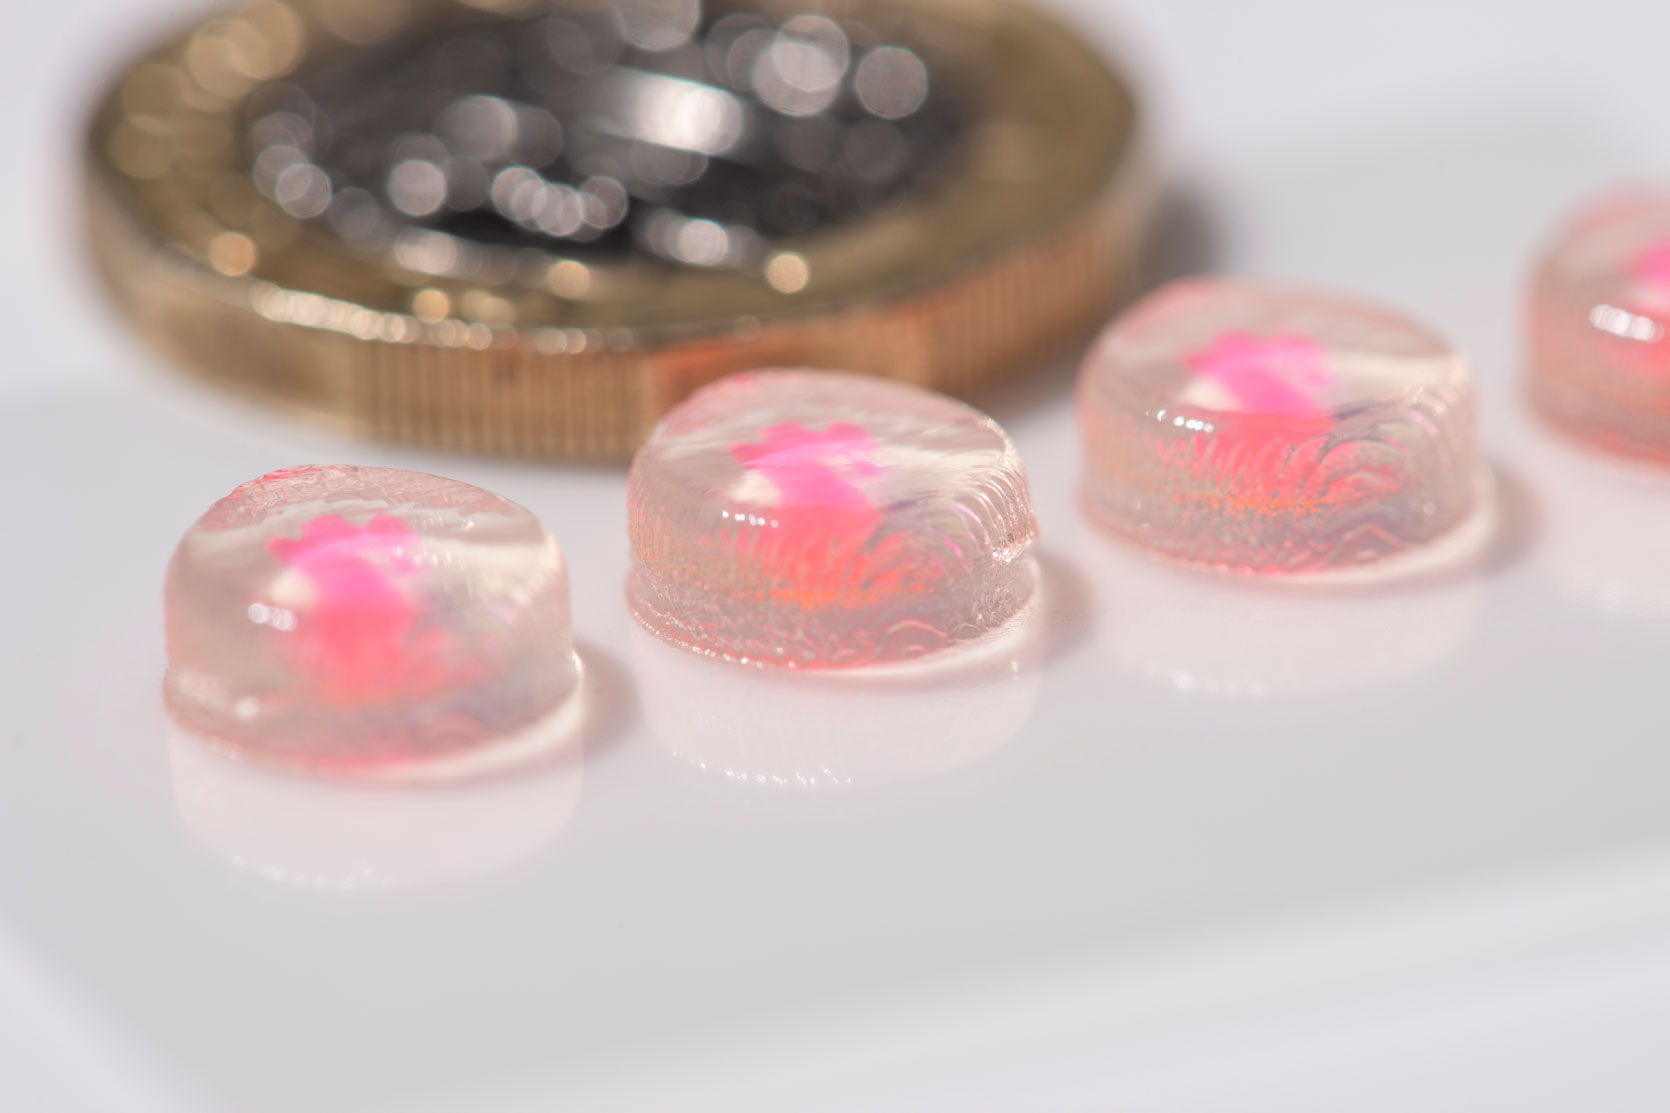 3dprint.com - Vanesa Listek - &#163;6M UK Grant Boosts 3D Printed Medicine and More